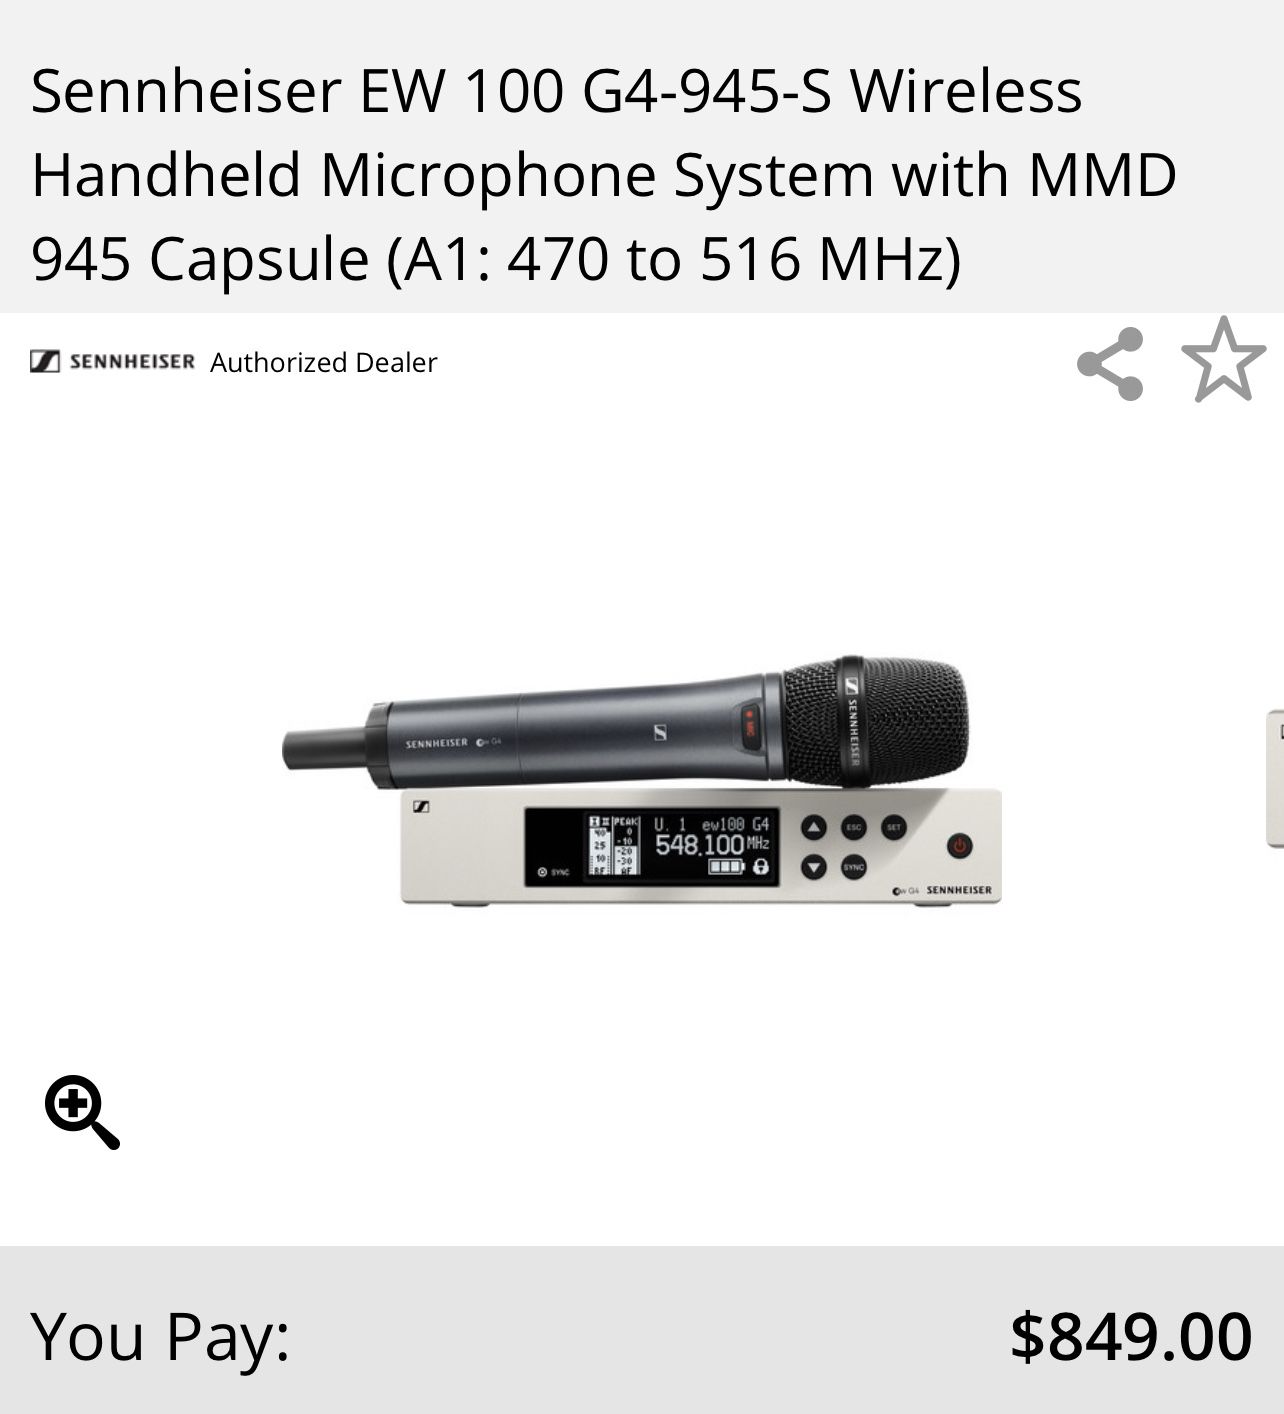  Sennheiser EW 100 G4-945-S Wireless Handheld Microphone System with MMD 